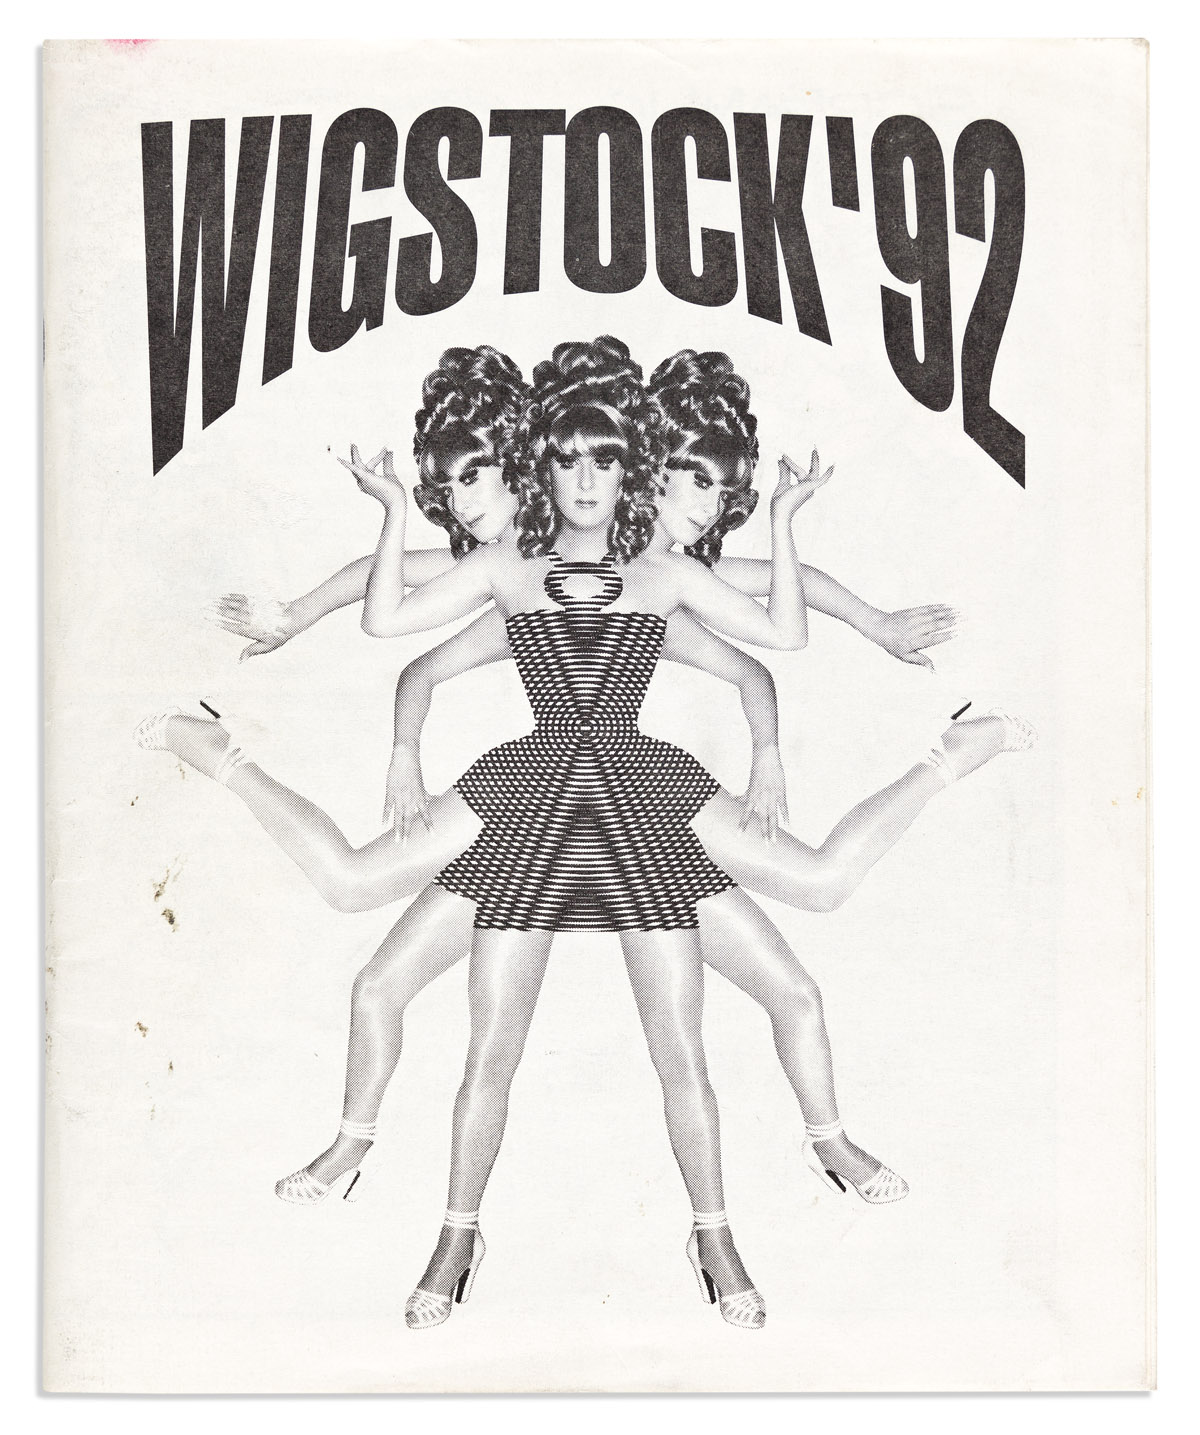 (WIGSTOCK) Pair of programs for Wigstock 89 and Wigstock 92 festivals.